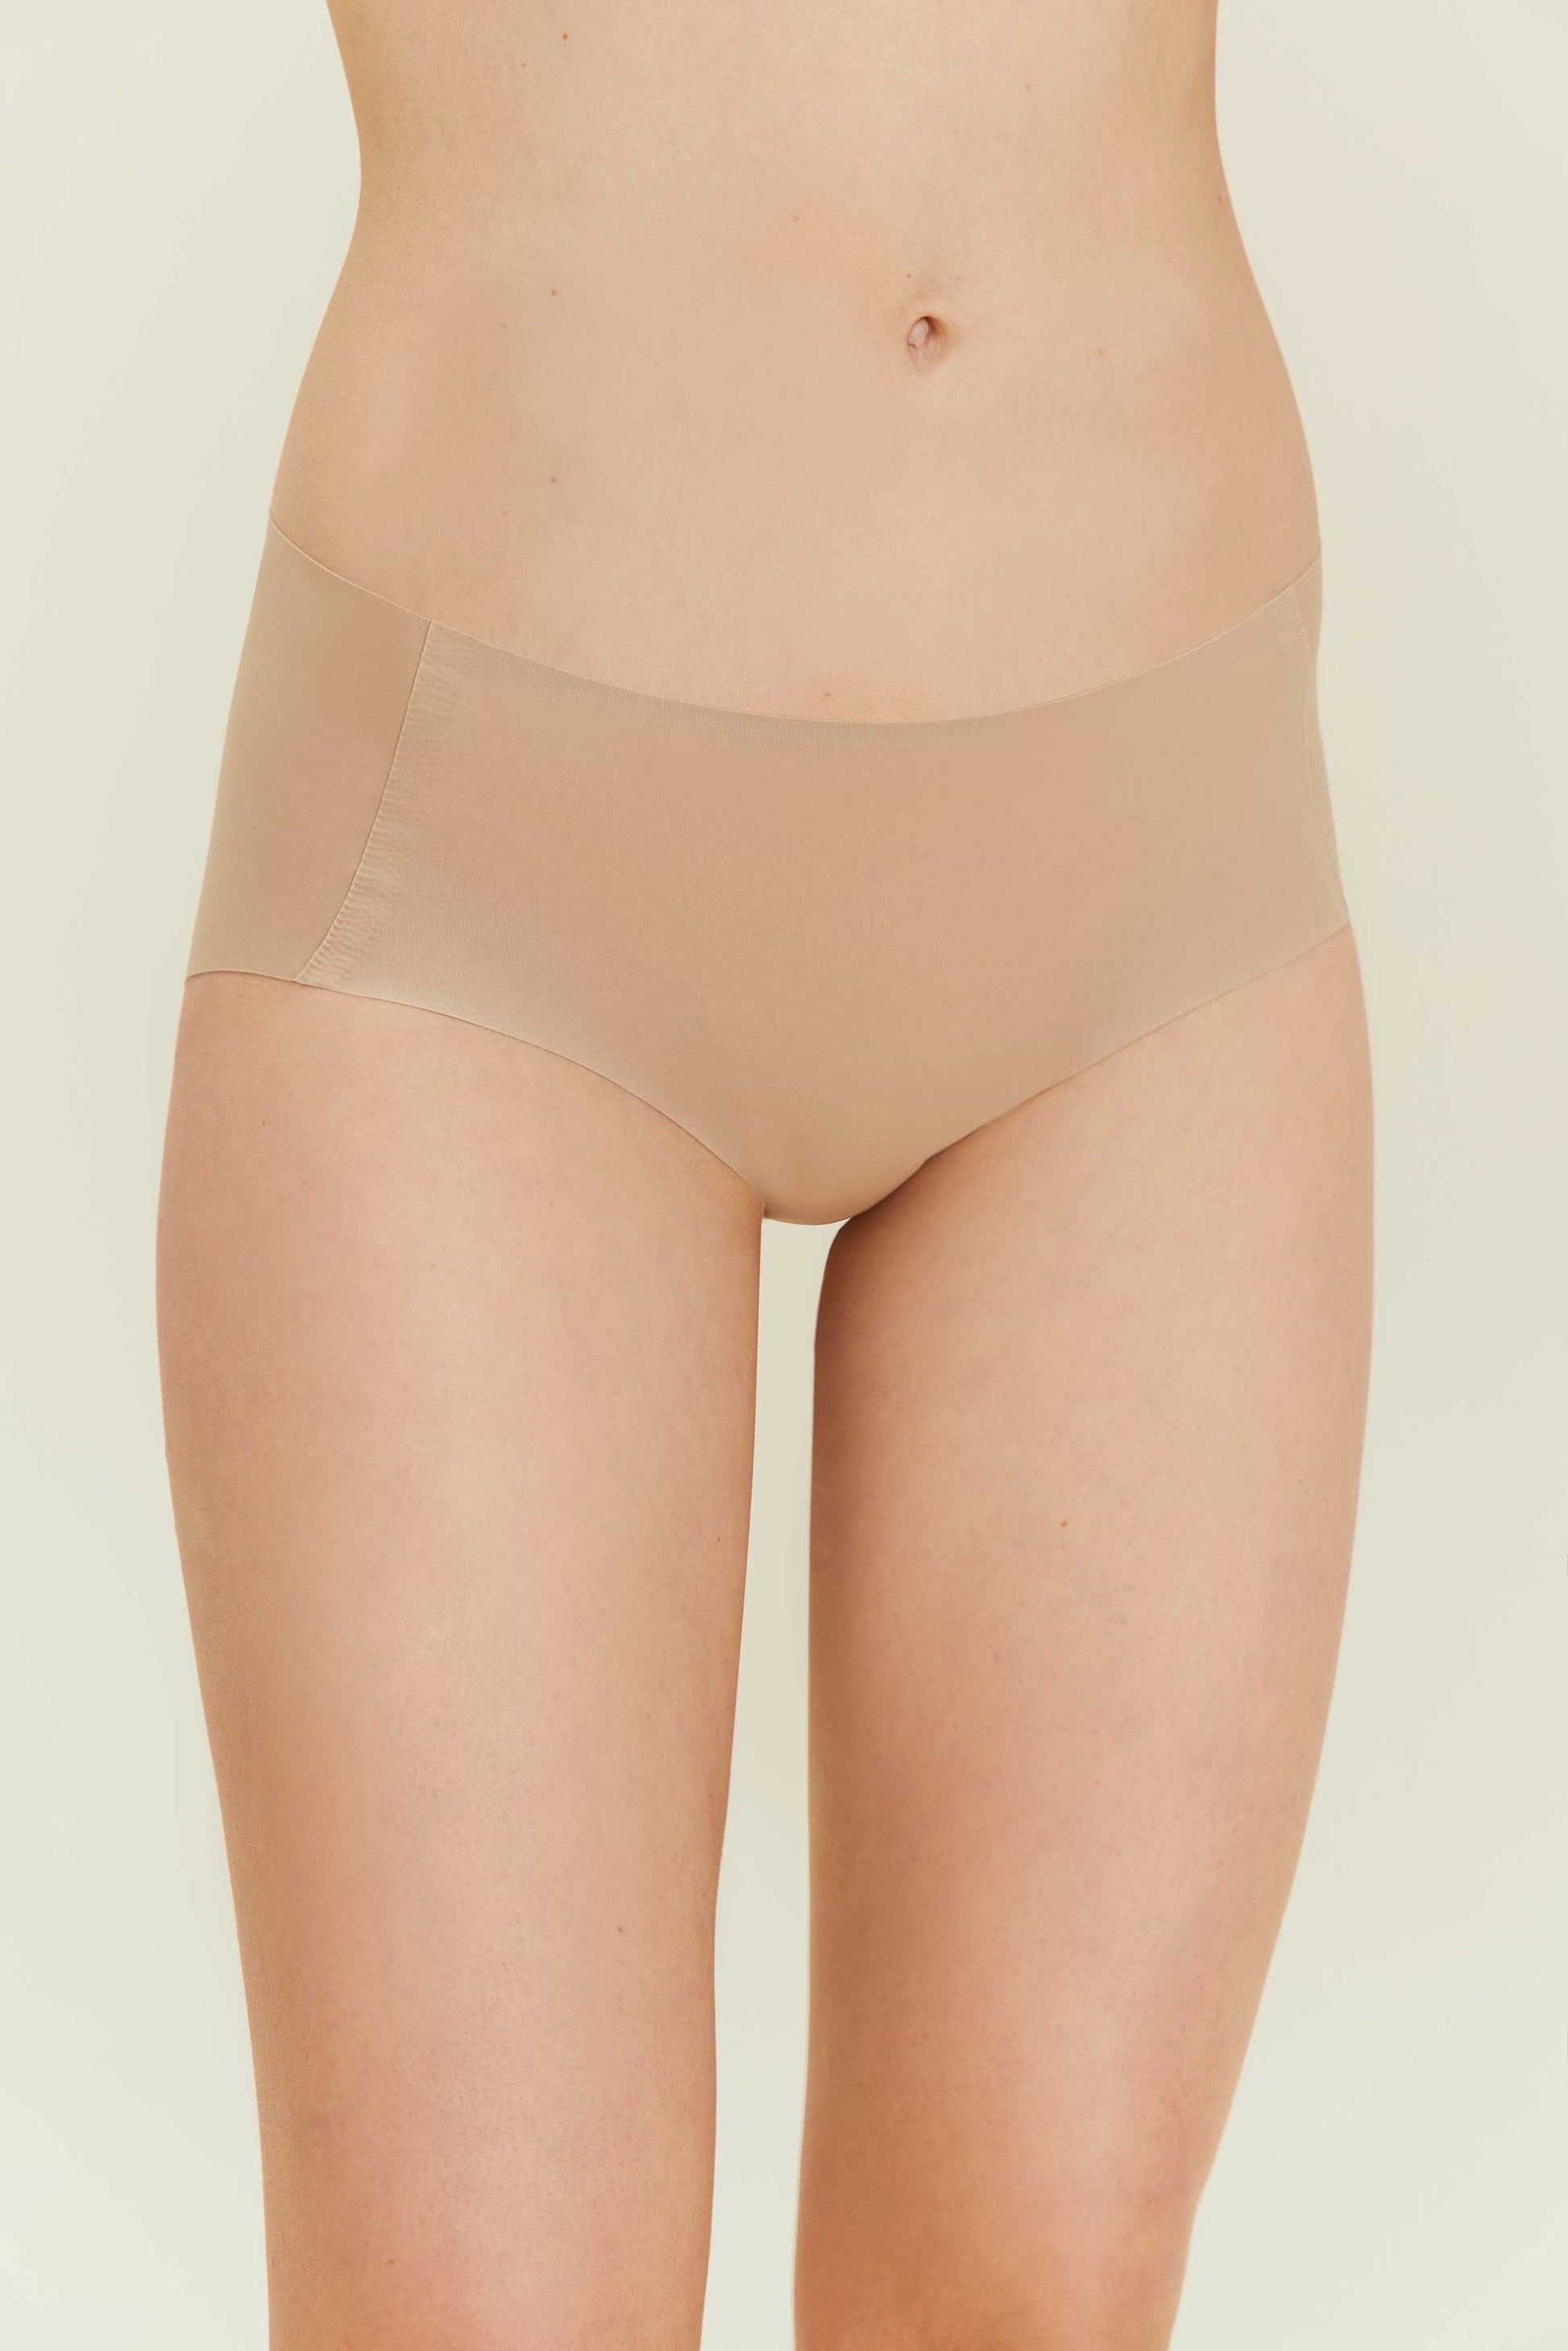 Lucky Brand ~ Womens Thong Underwear Panties Nylon Blend 5-Pair